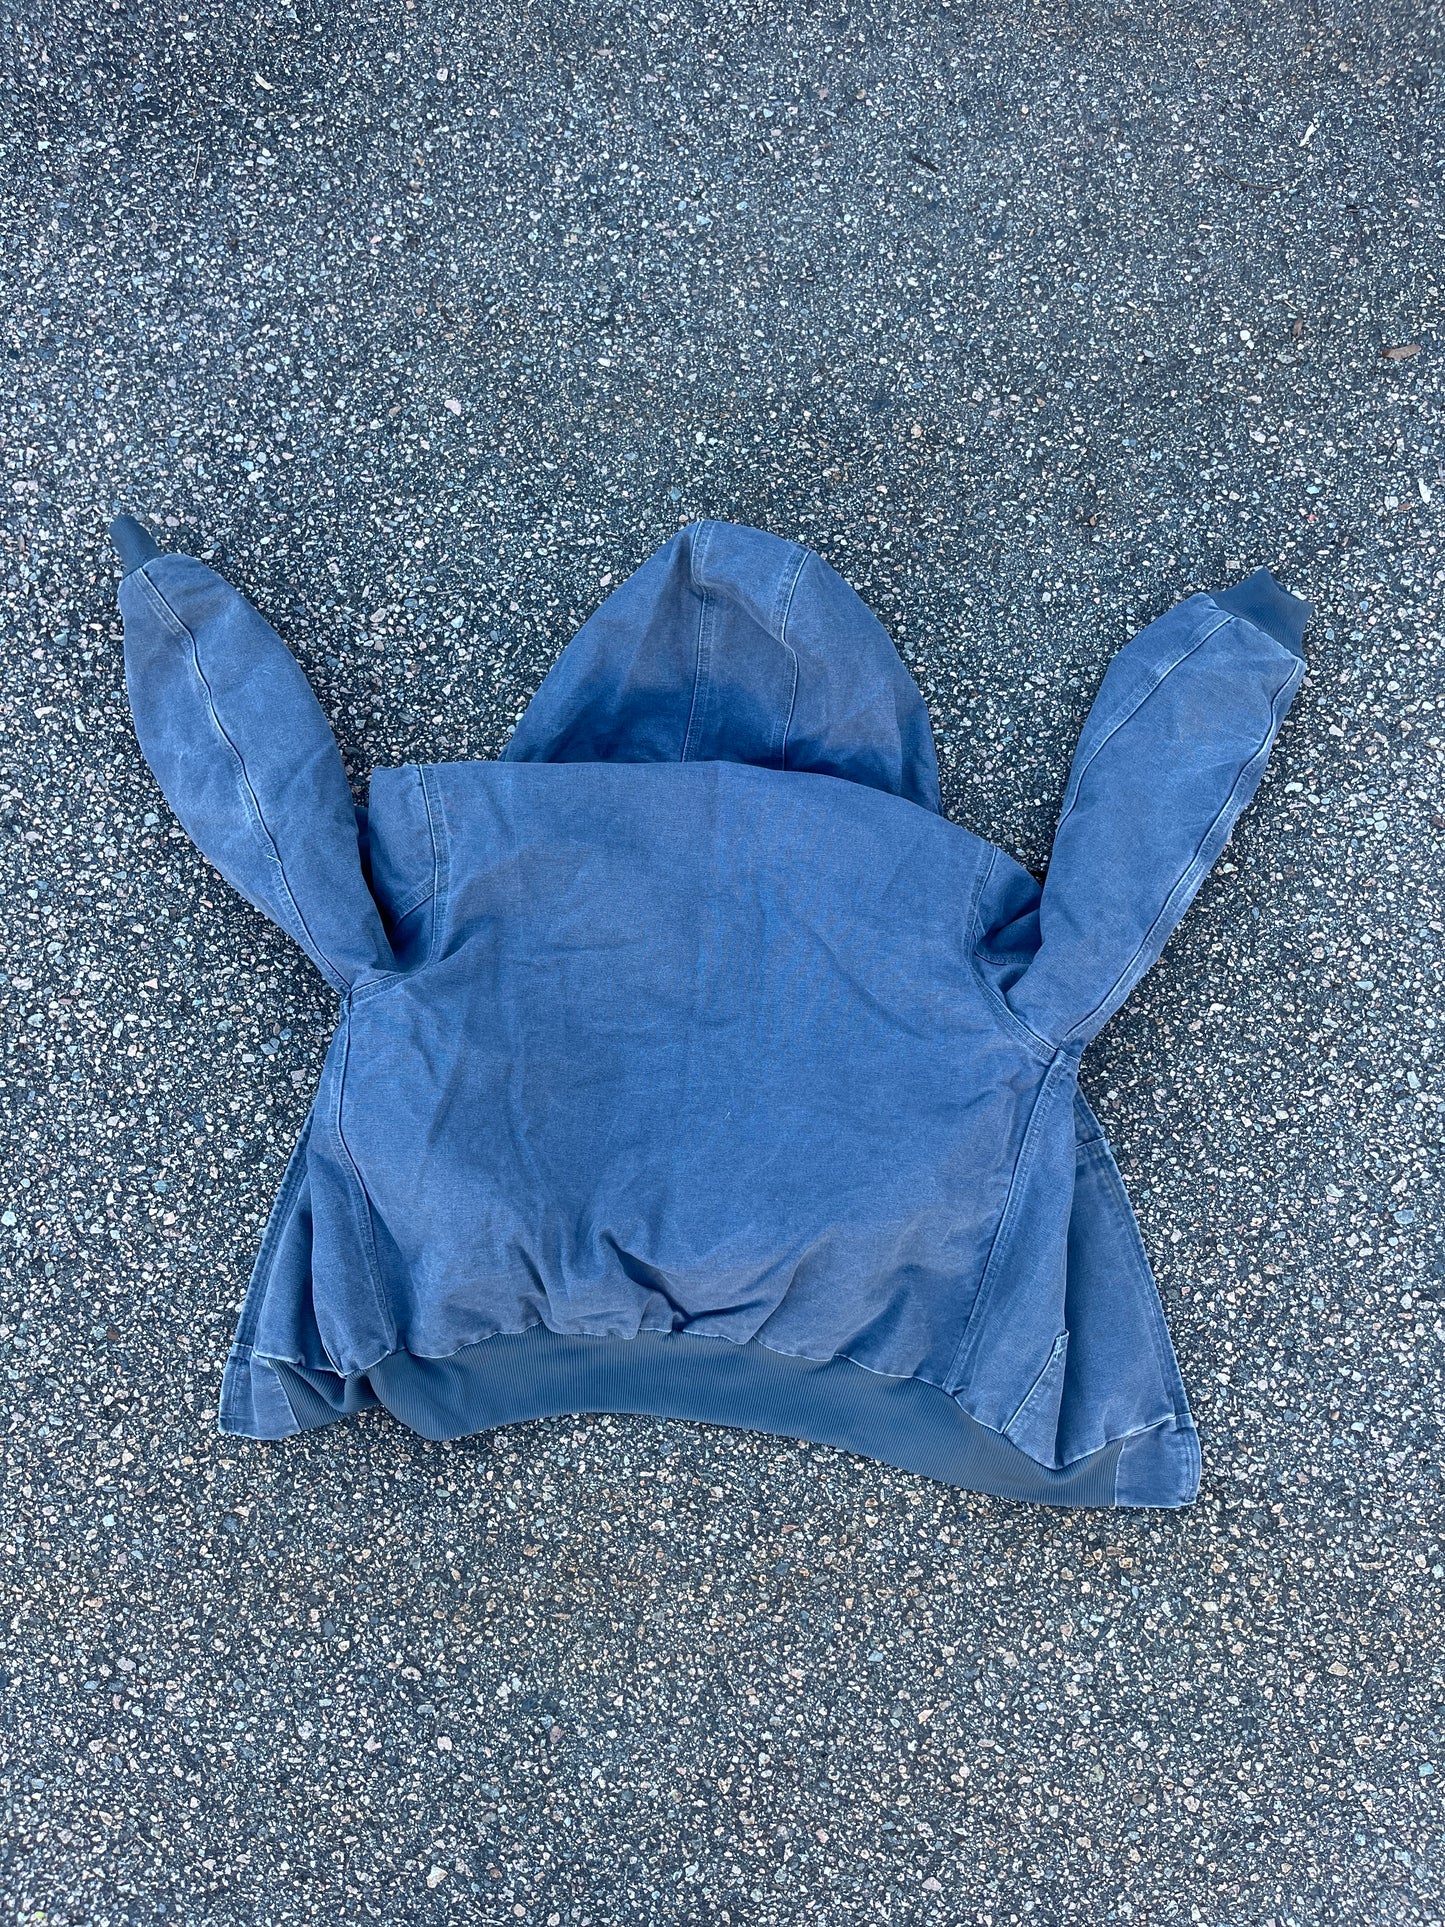 Faded Storm Blue Carhartt Active Jacket - Medium